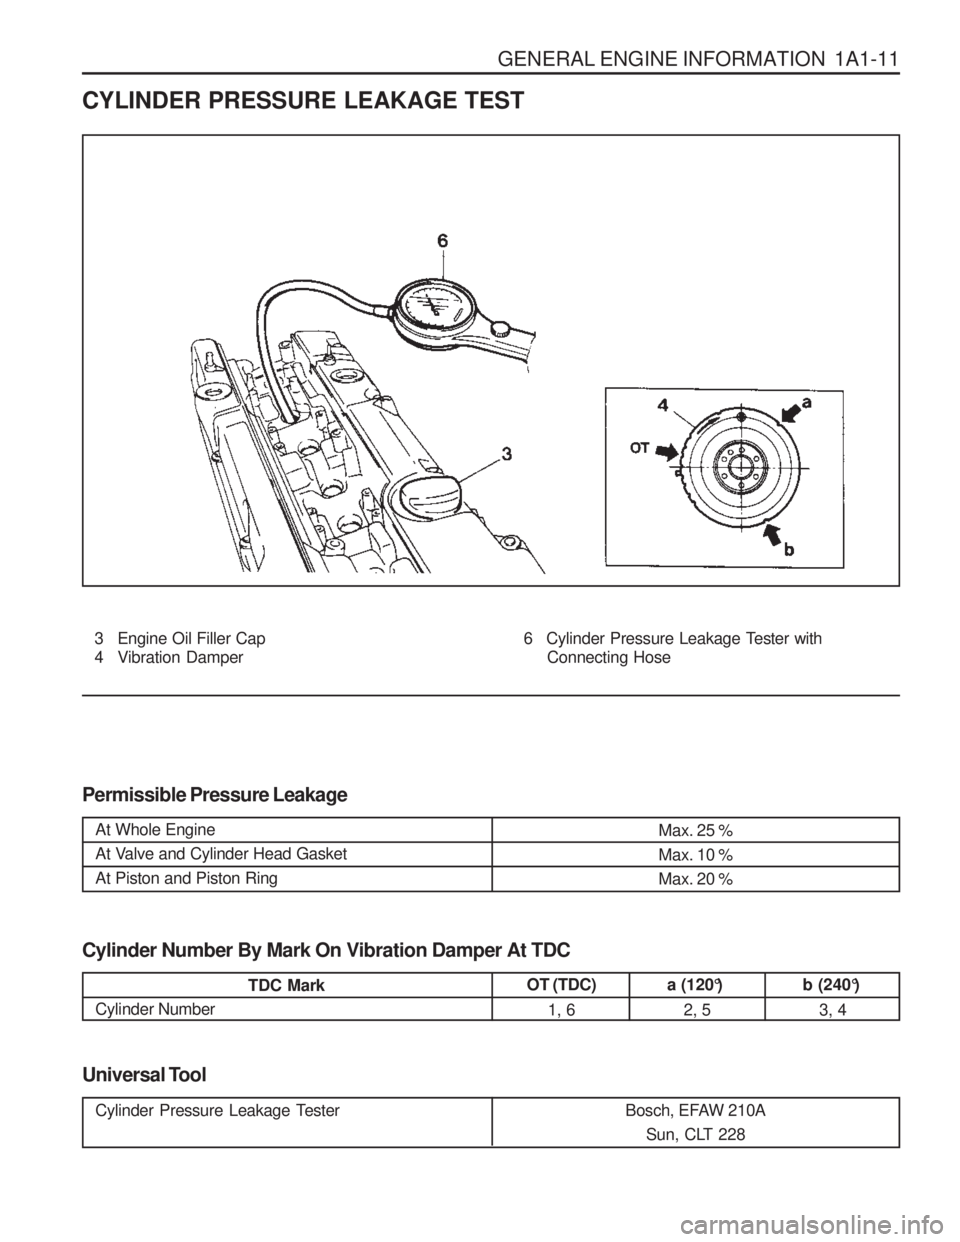 SSANGYONG MUSSO 2003 Owners Manual GENERAL ENGINE INFORMATION  1A1-11
CYLINDER PRESSURE LEAKAGE TEST
3 Engine Oil Filler Cap 
4 Vibration Damper
Permissible Pressure Leakage 6 Cylinder Pressure Leakage T
ester with
Connecting Hose
Univ